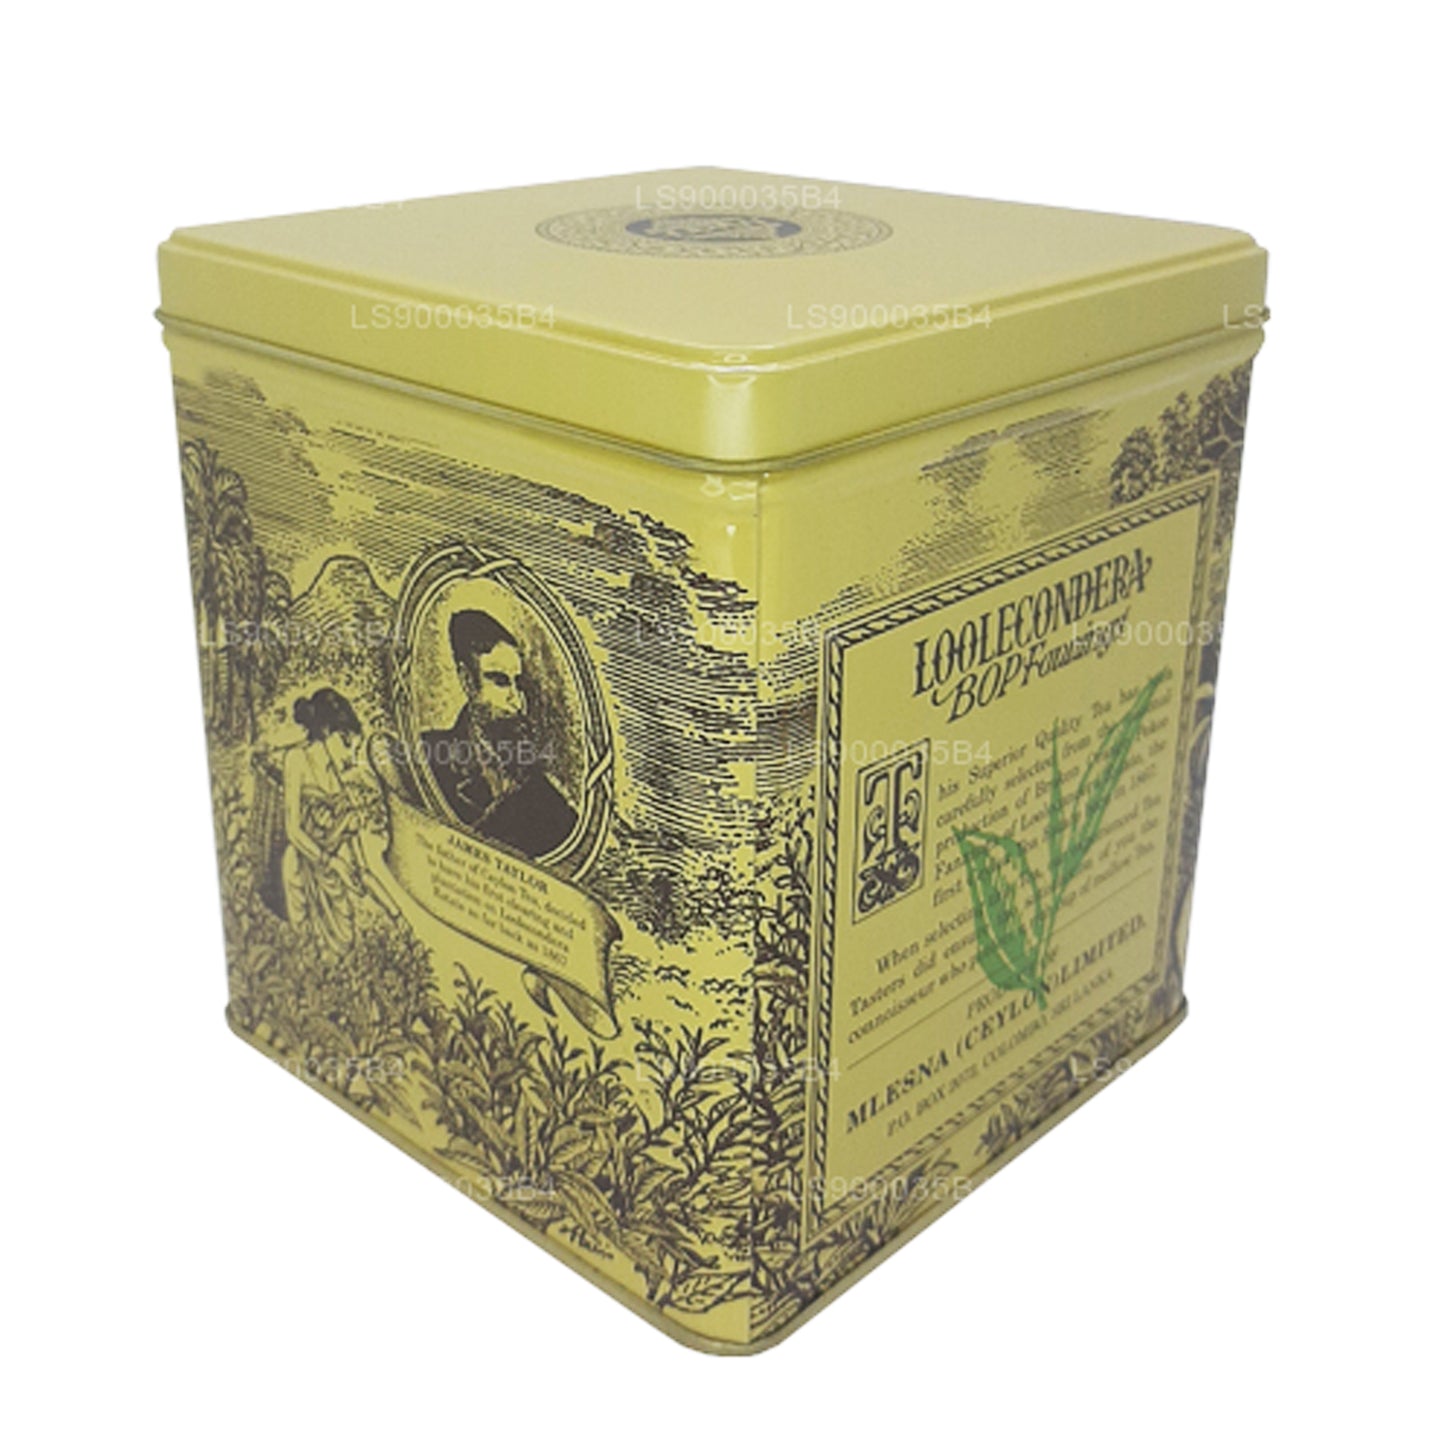 Mlesna Loolecondera BOP Fannings Grade Tea (500g) Caddy